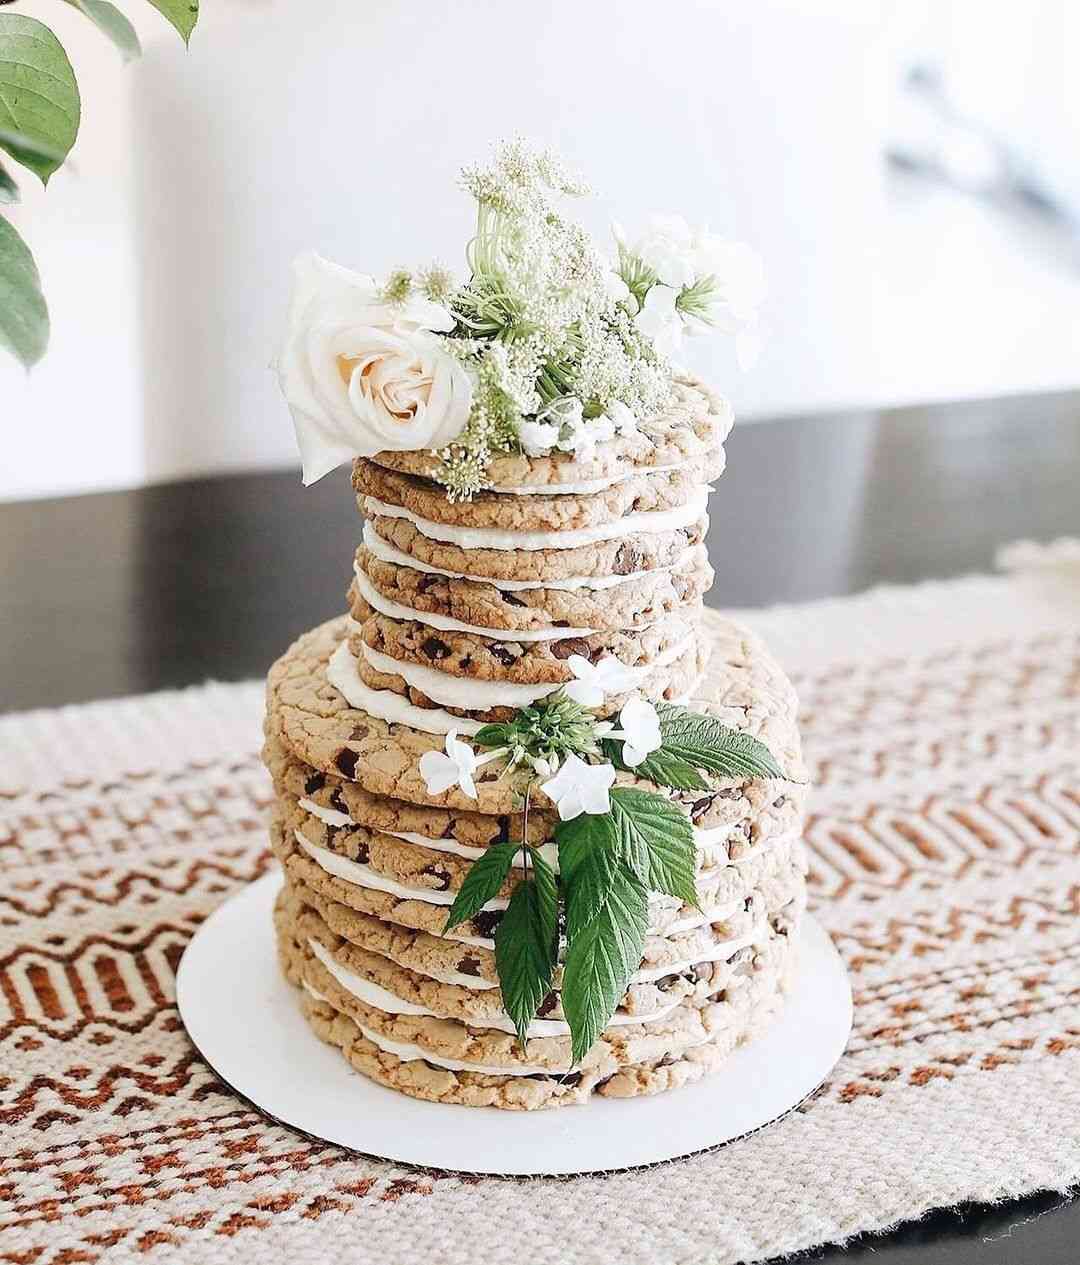 Wedding cookie cake with greenery